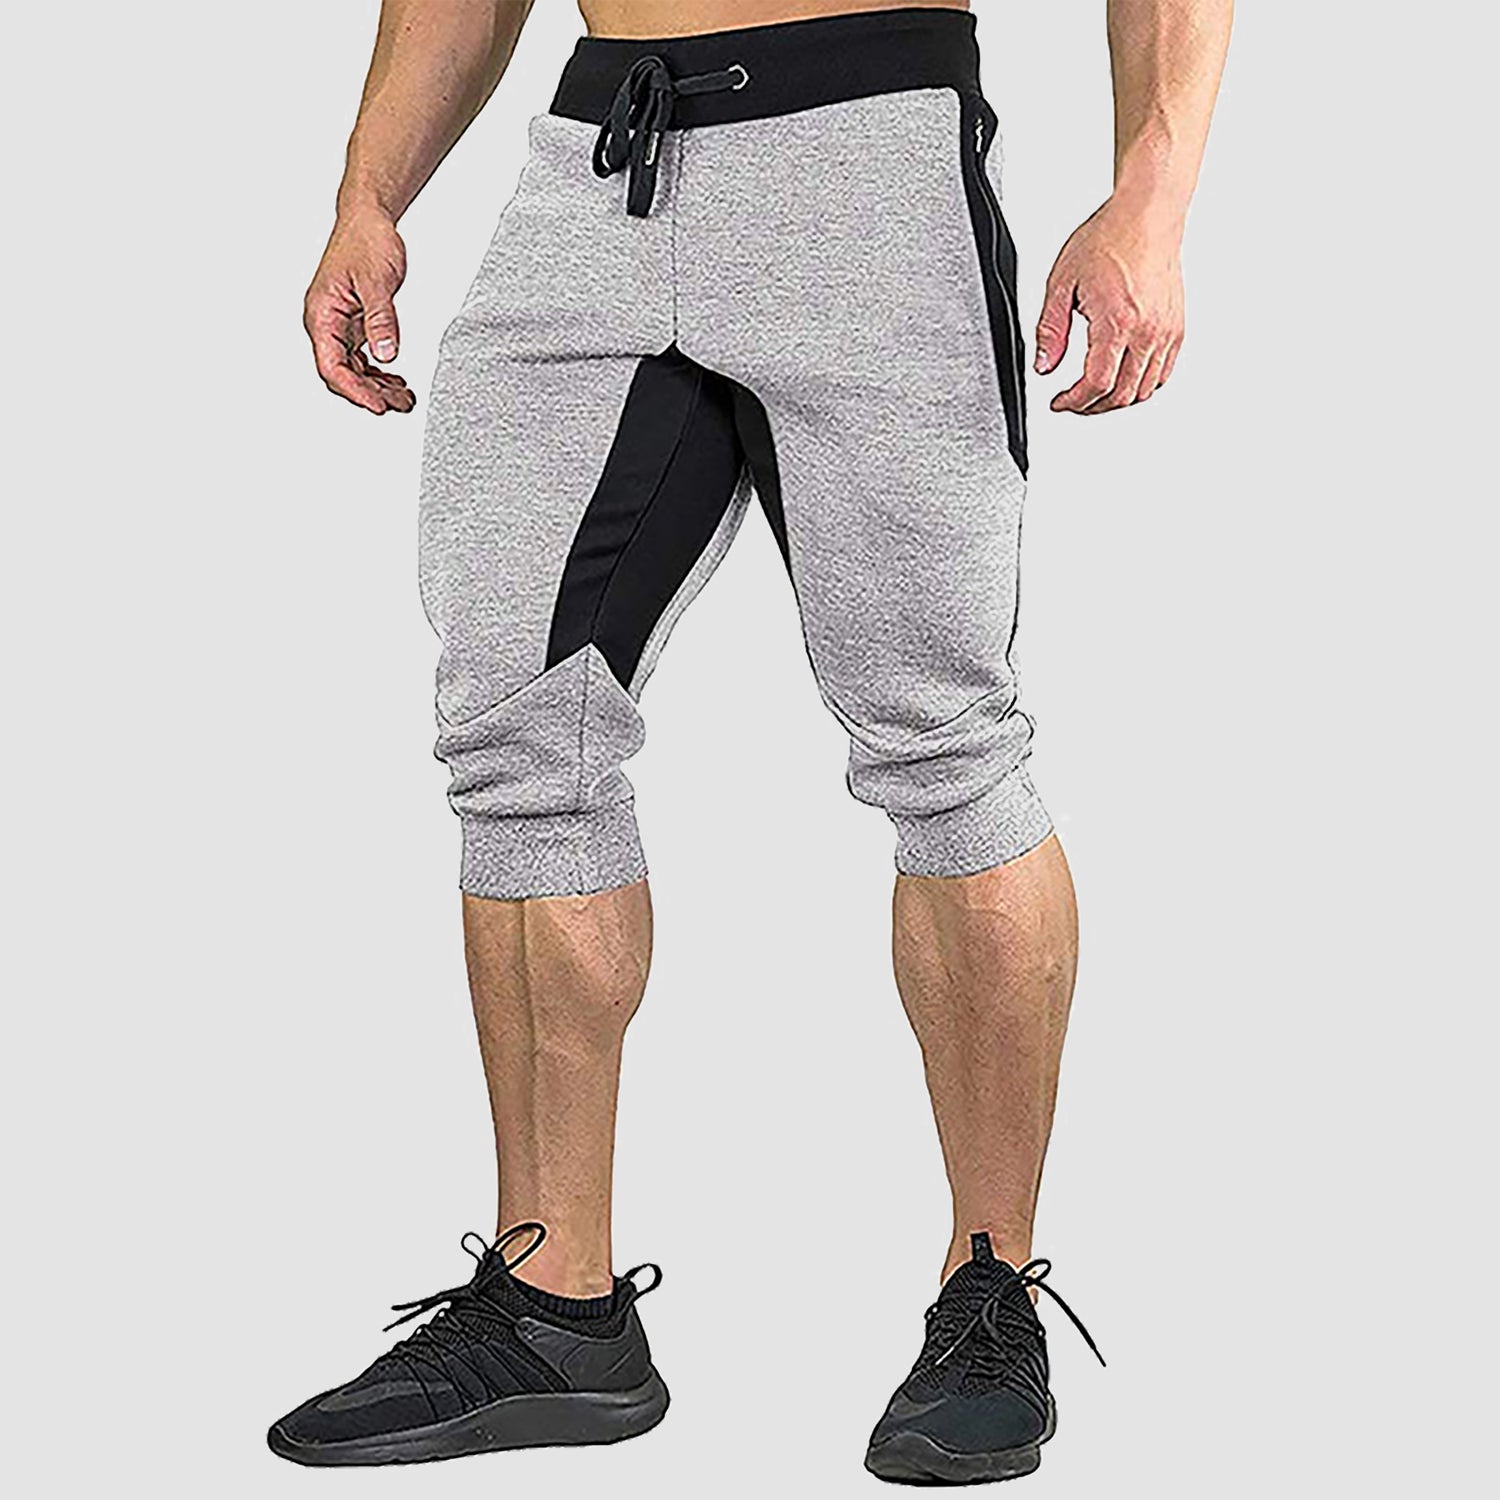 Men's  3/4 Length Cotton Summer Sweatpants Zipper Pockets Drawstring Gym Training Workout Shorts